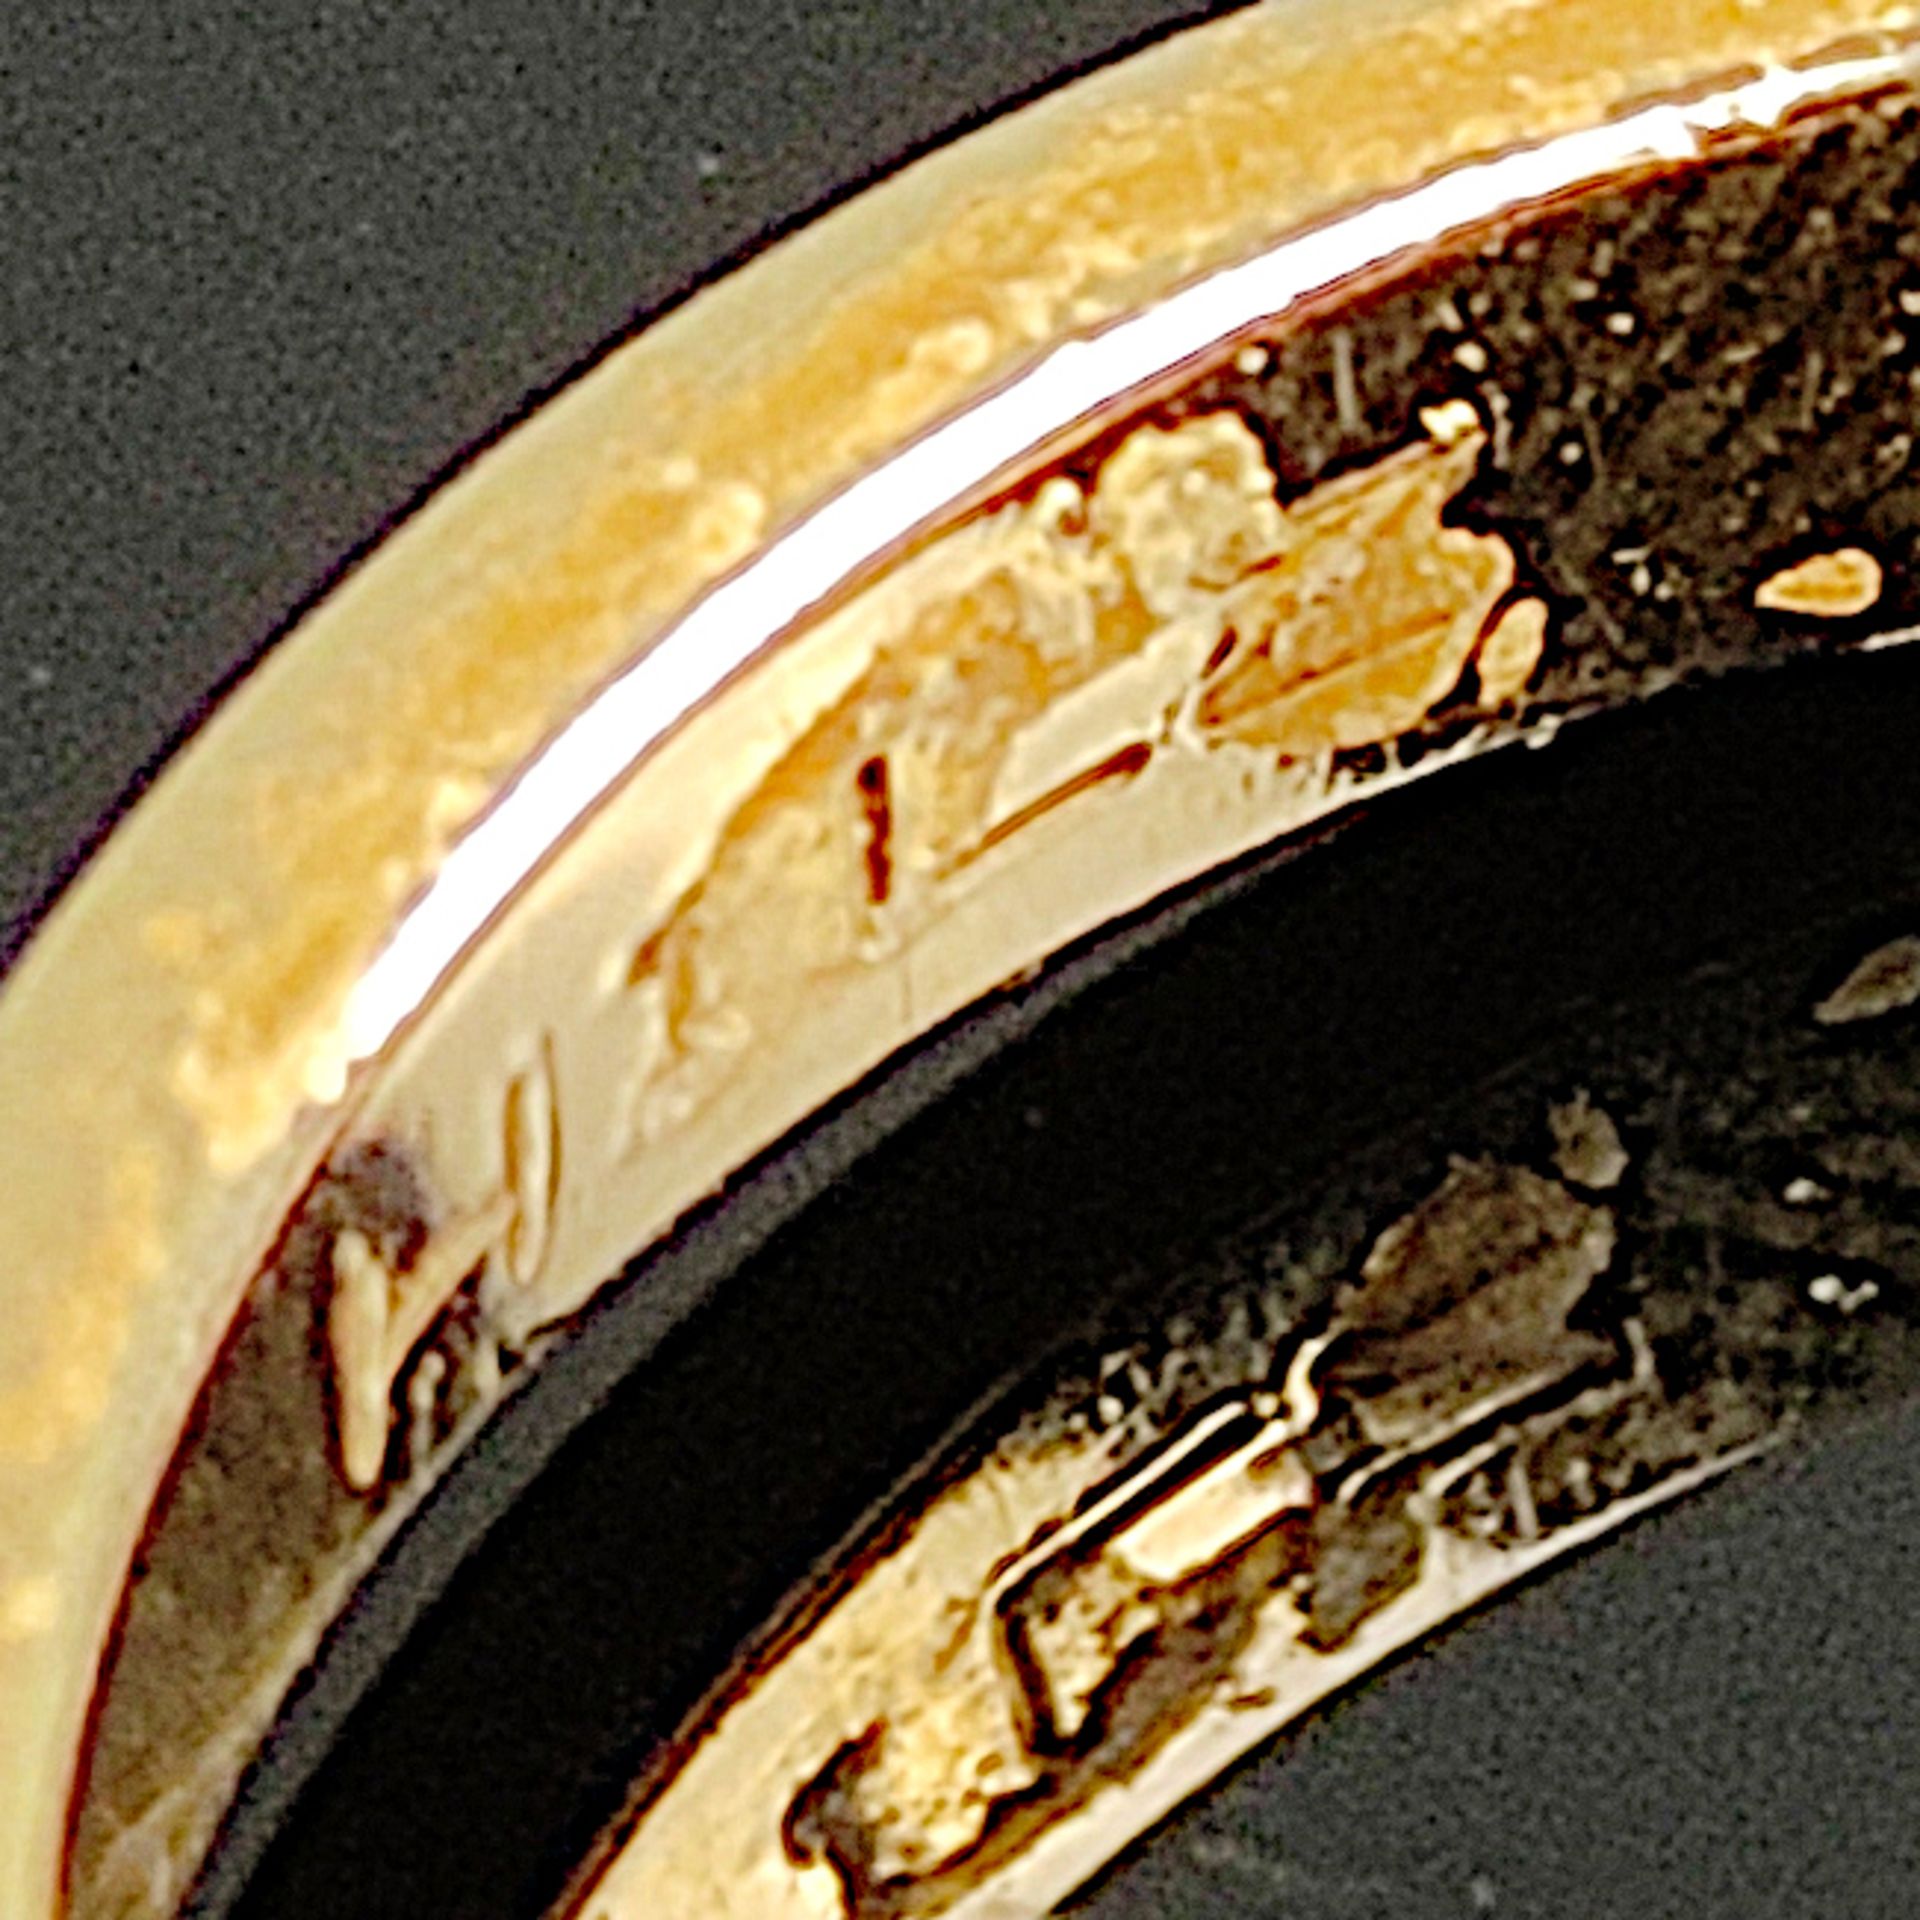 Diamant Ring, 750/18K Gelbgold (punziert), 3,52g, mittig Diamant um 0,43ct., beidseitig je 2 Diaman - Bild 4 aus 4